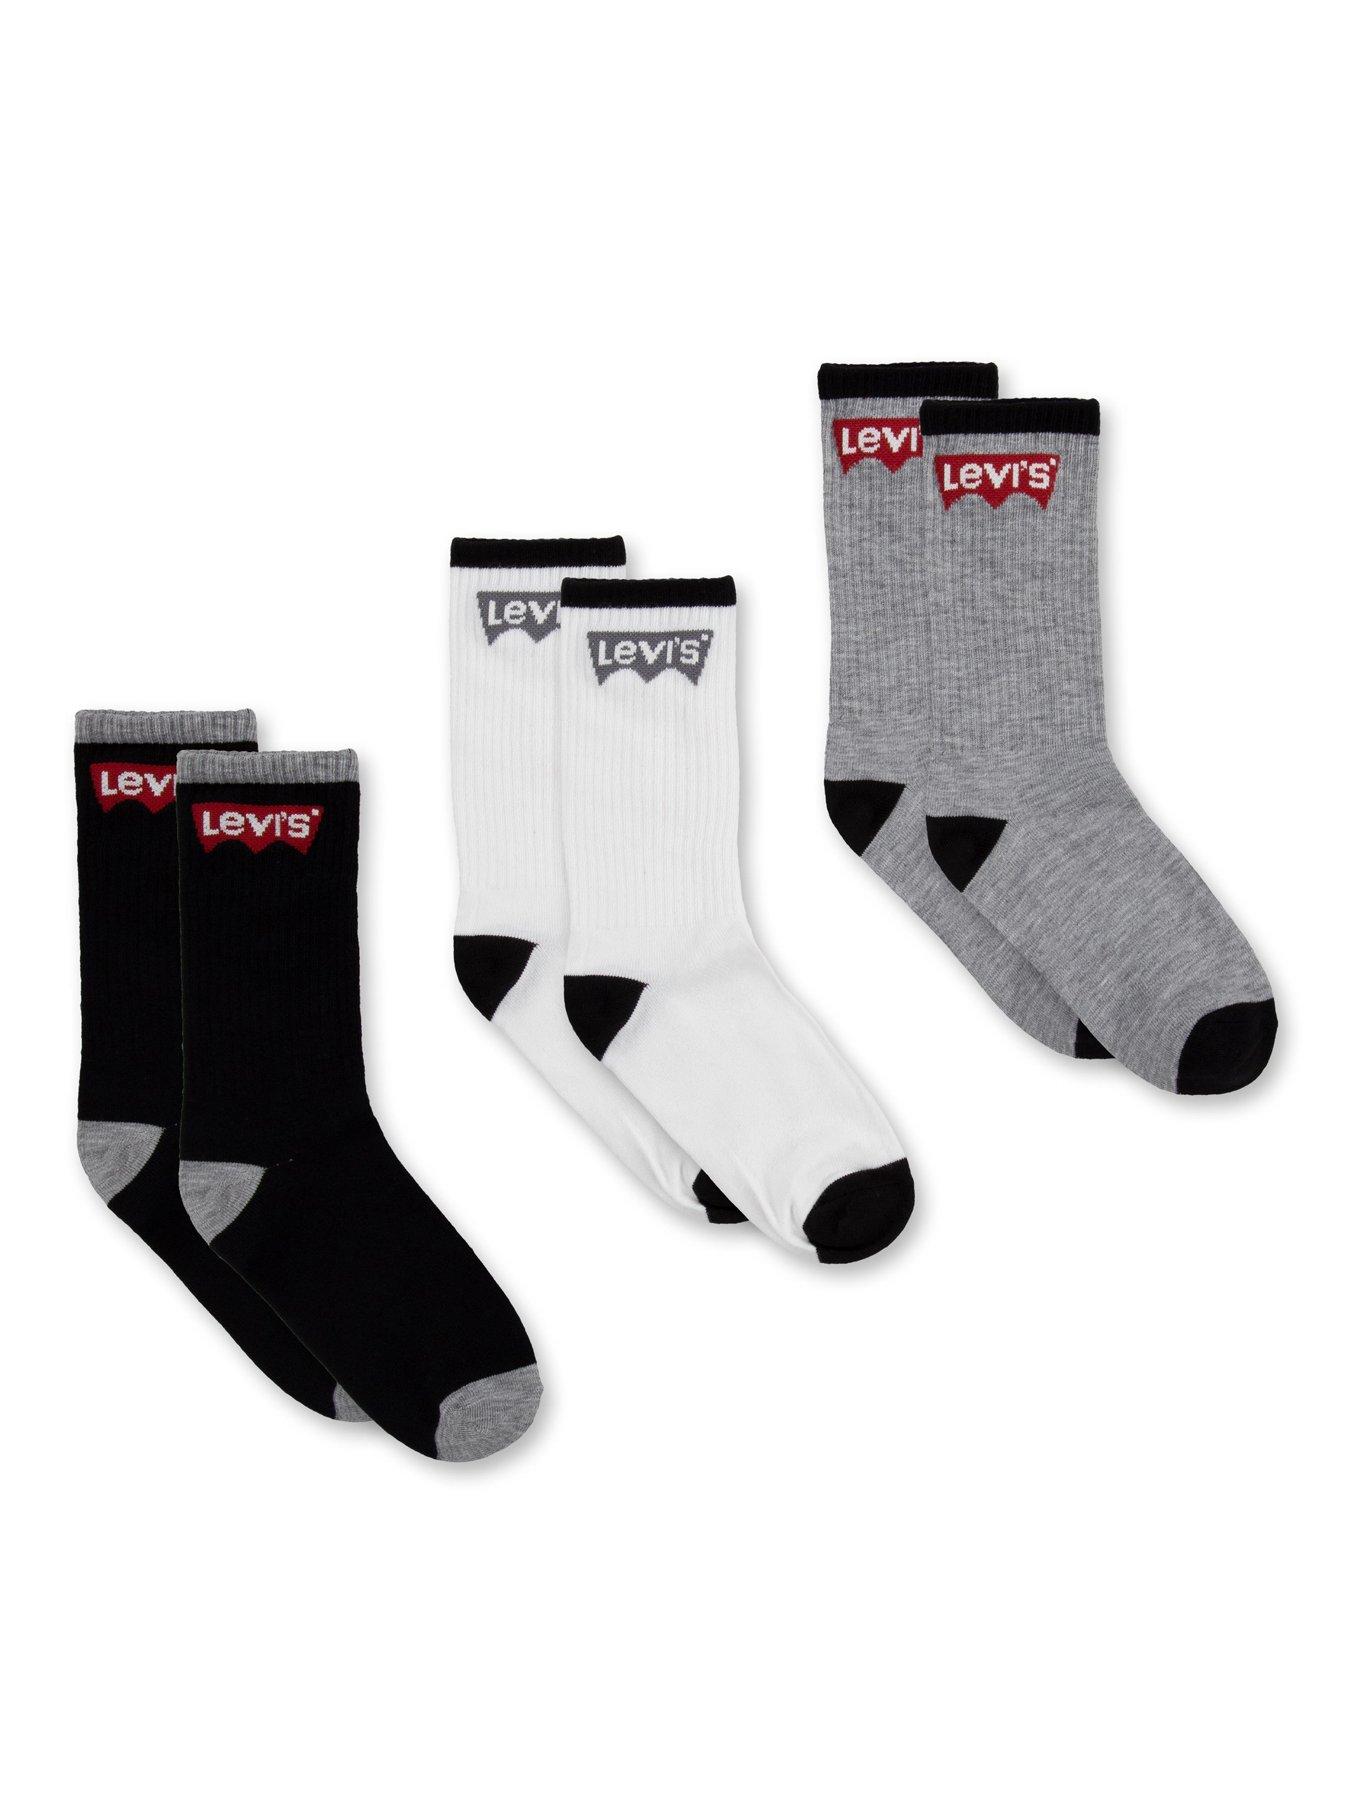 Levi's, Underwear & Socks